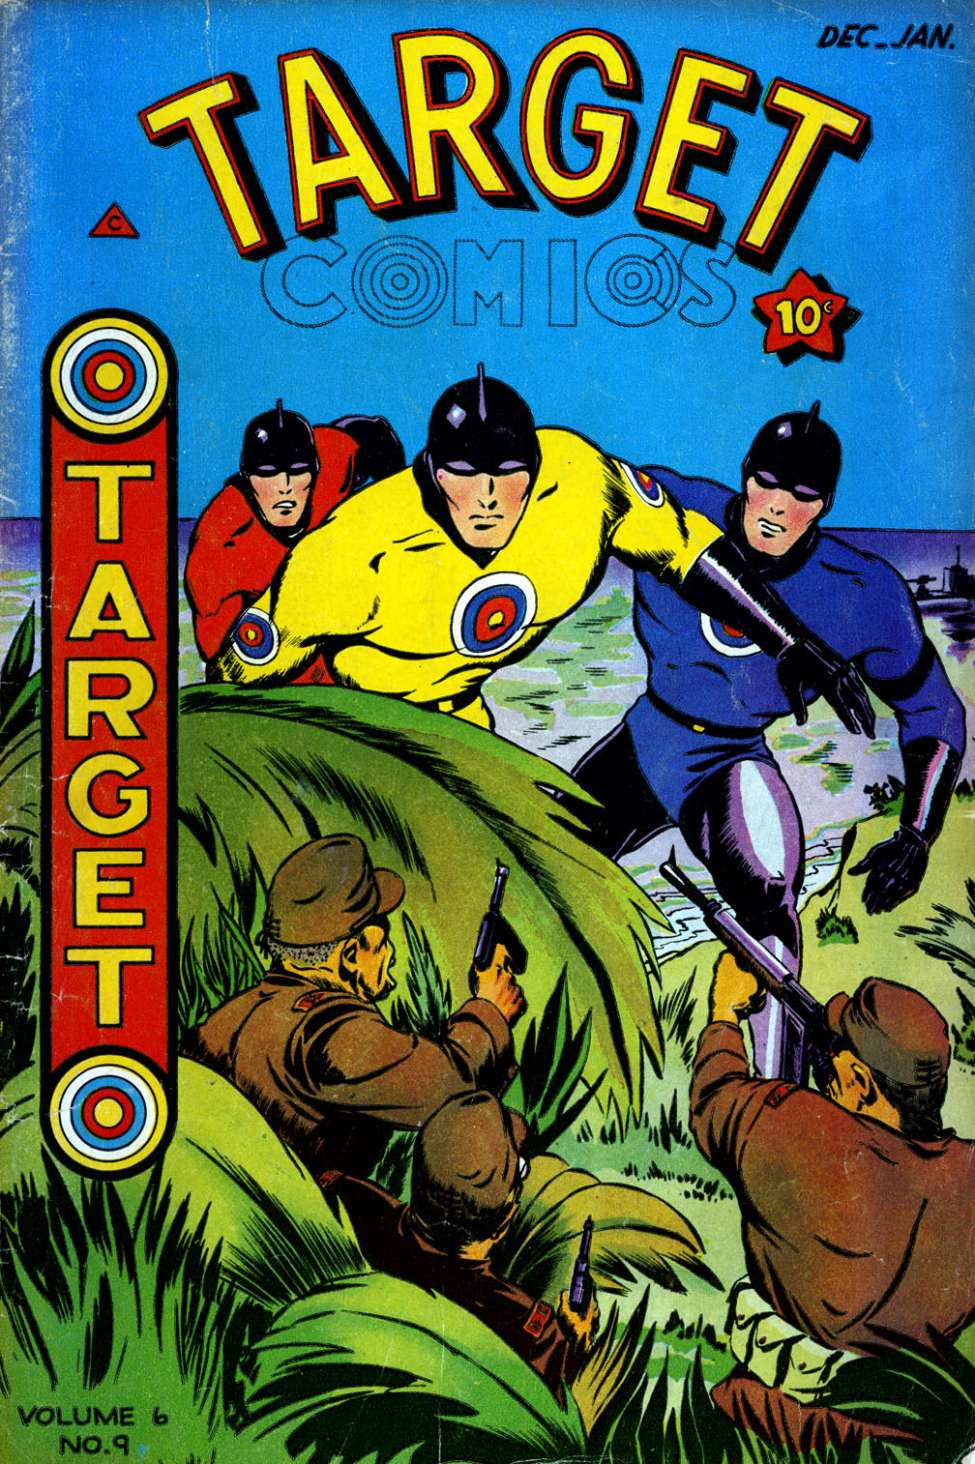 Comic Book Cover For Target Comics v6 9